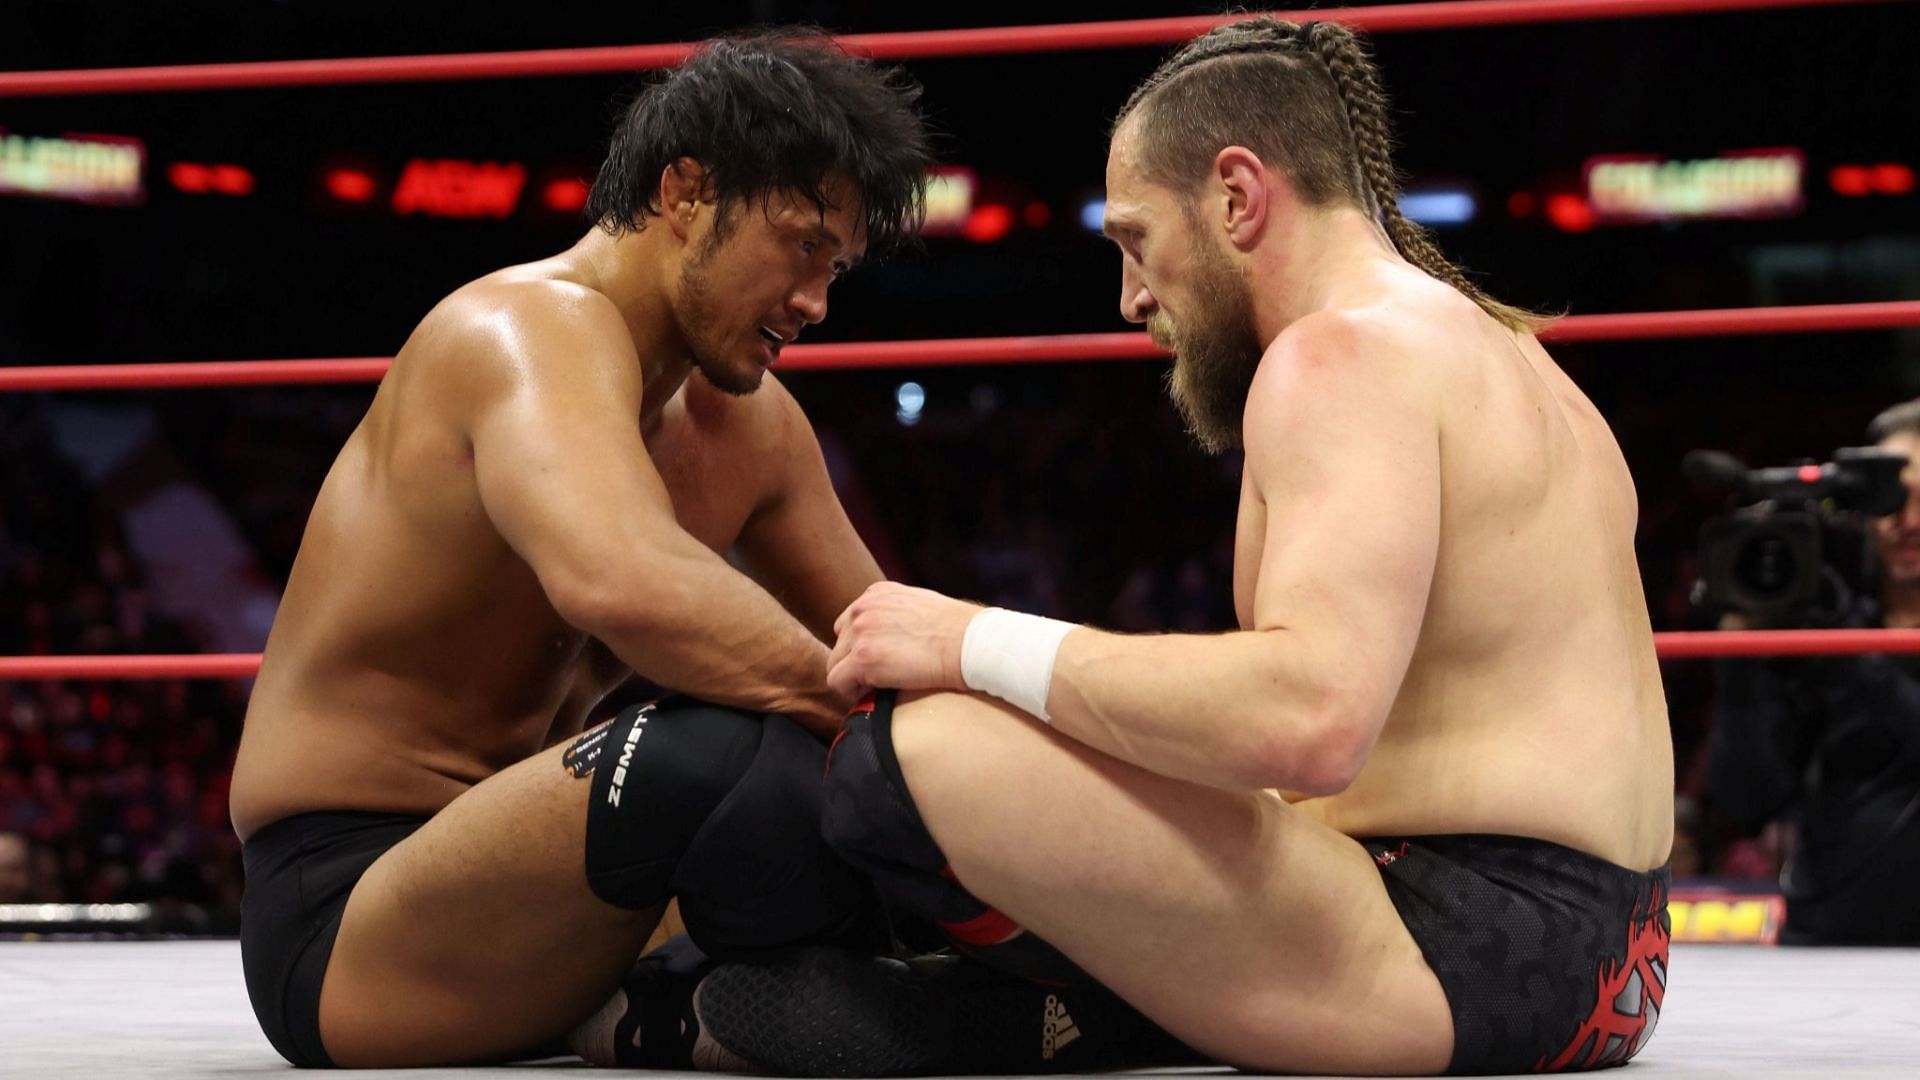 Katsuyori Shibata and Bryan Danielson face off on AEW Collision